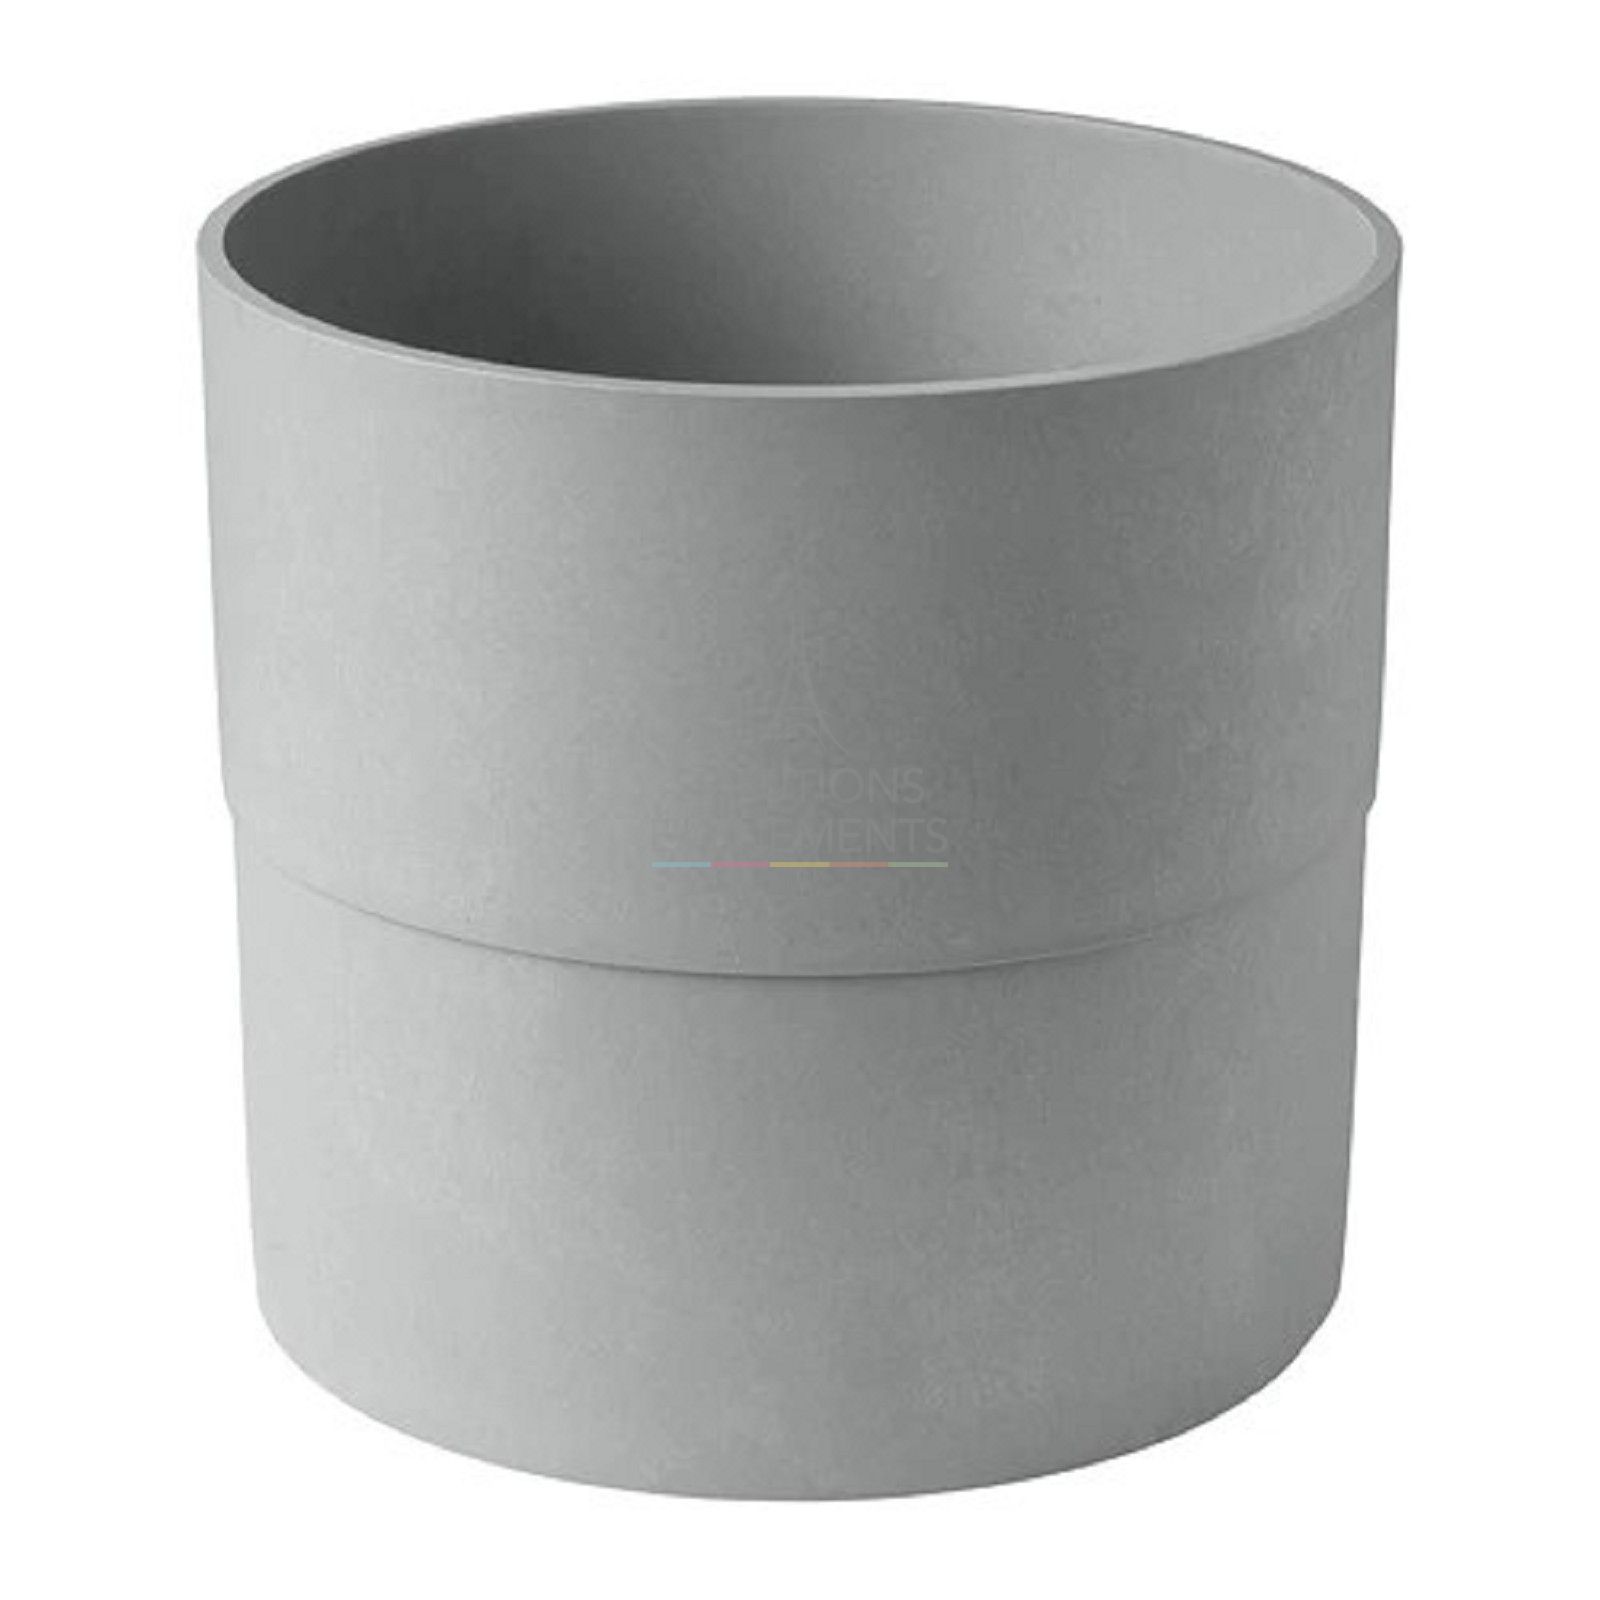 Pot holder rental for indoor or outdoor